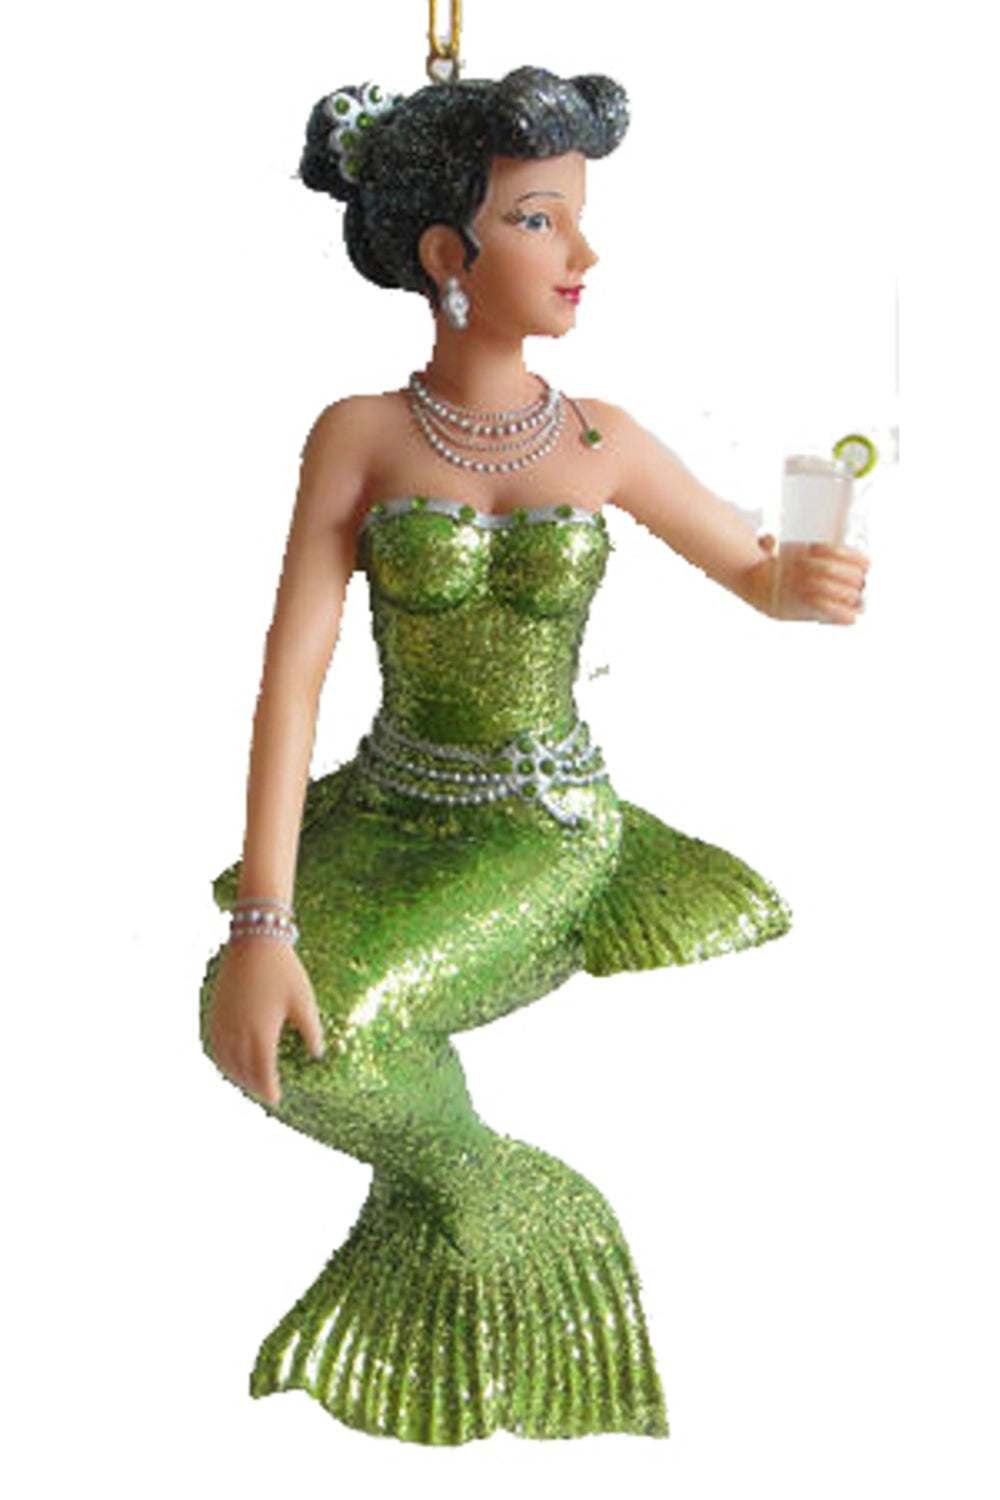 DCD Mermaid Ornament - Gin Girl